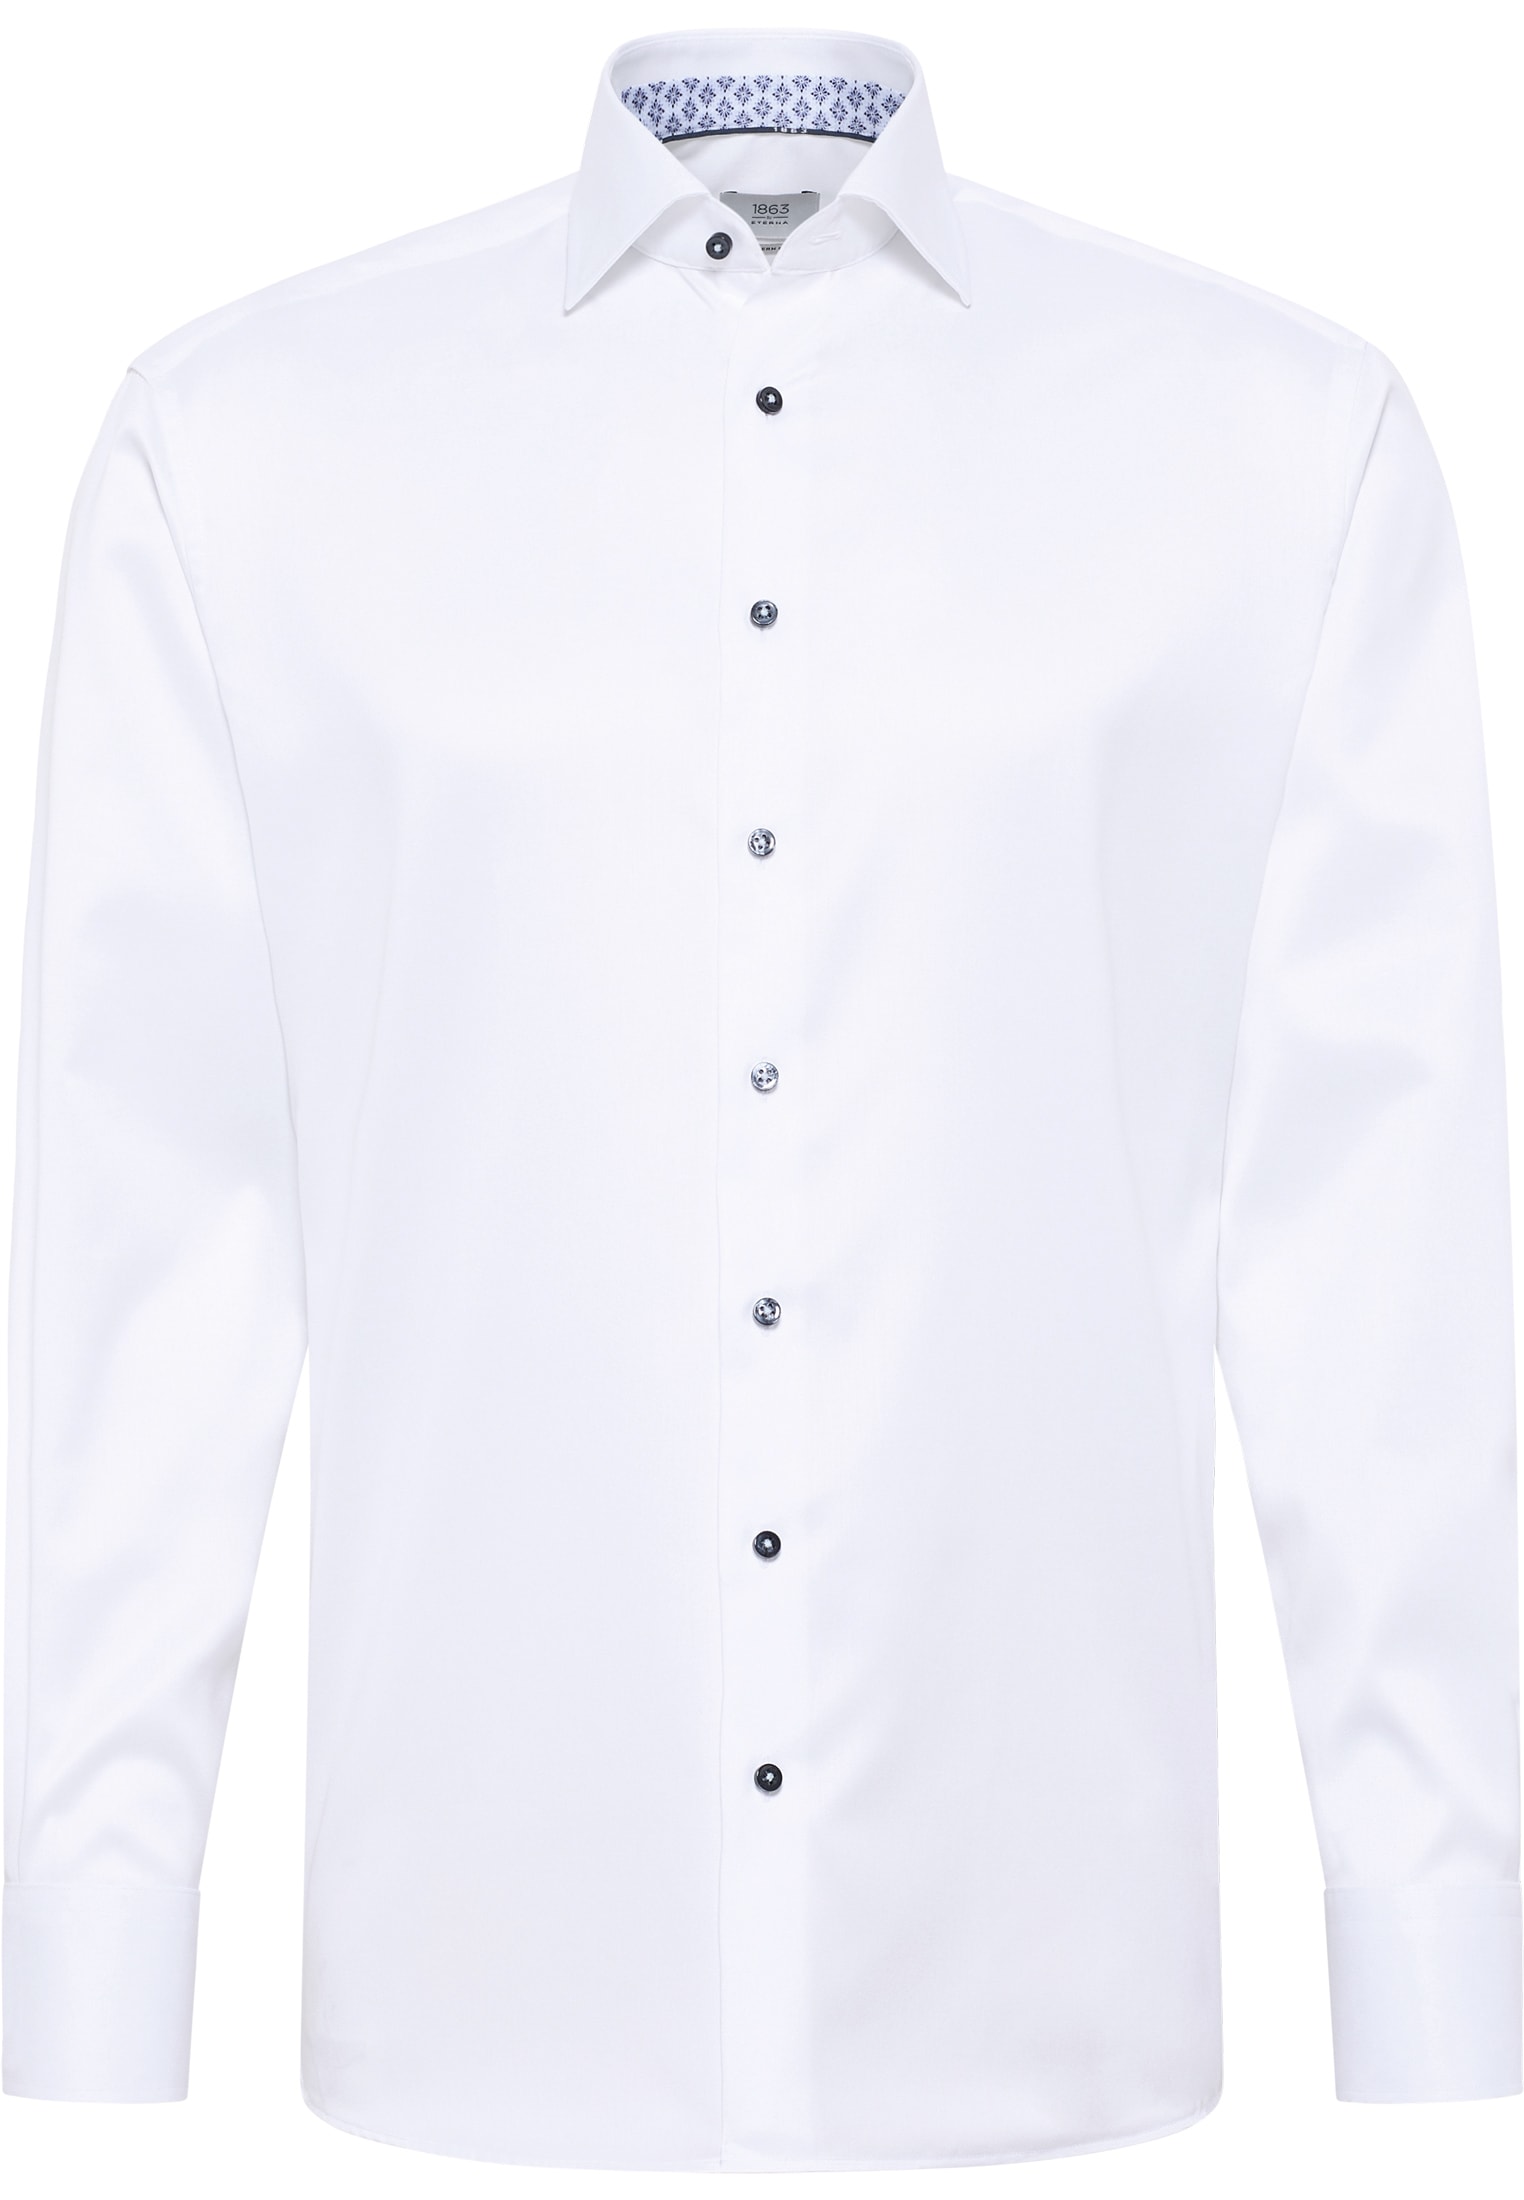 MODERN FIT Luxury Shirt blanc uni